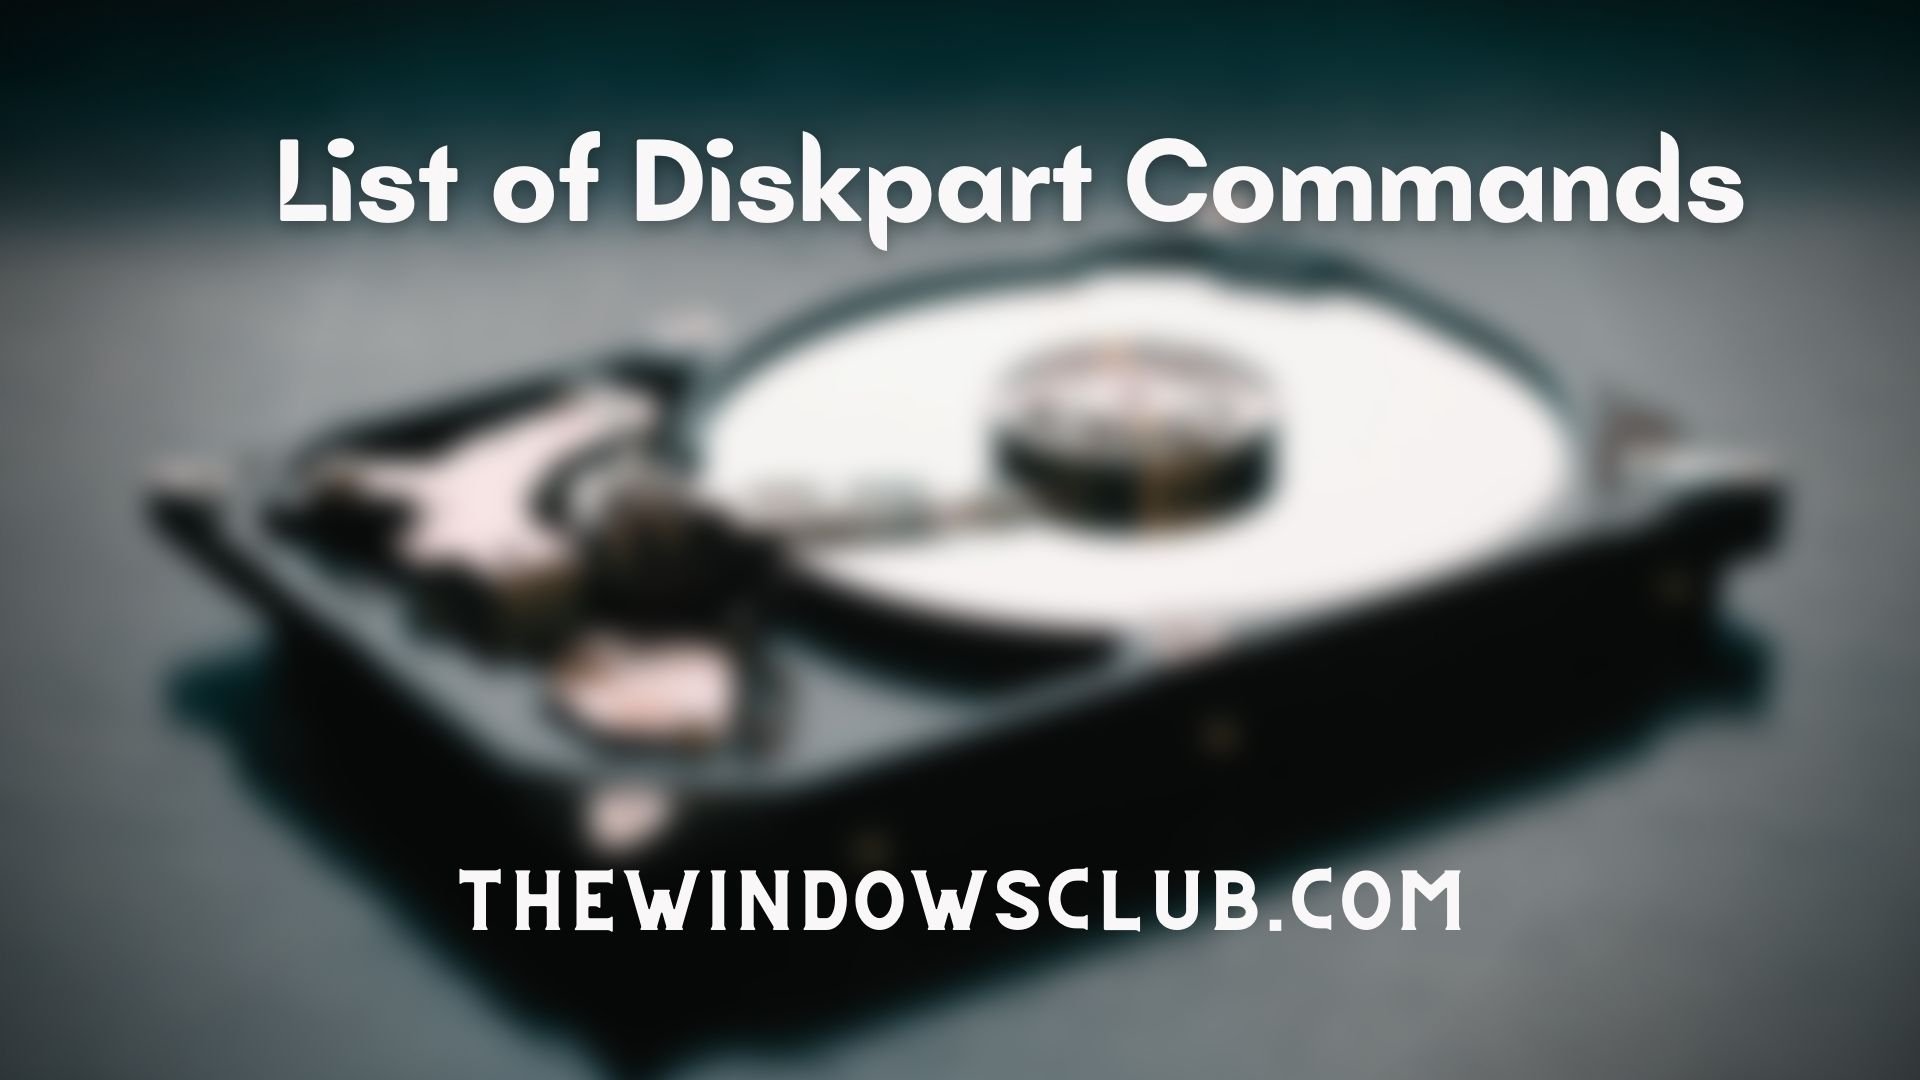 List of Diskpart Commands